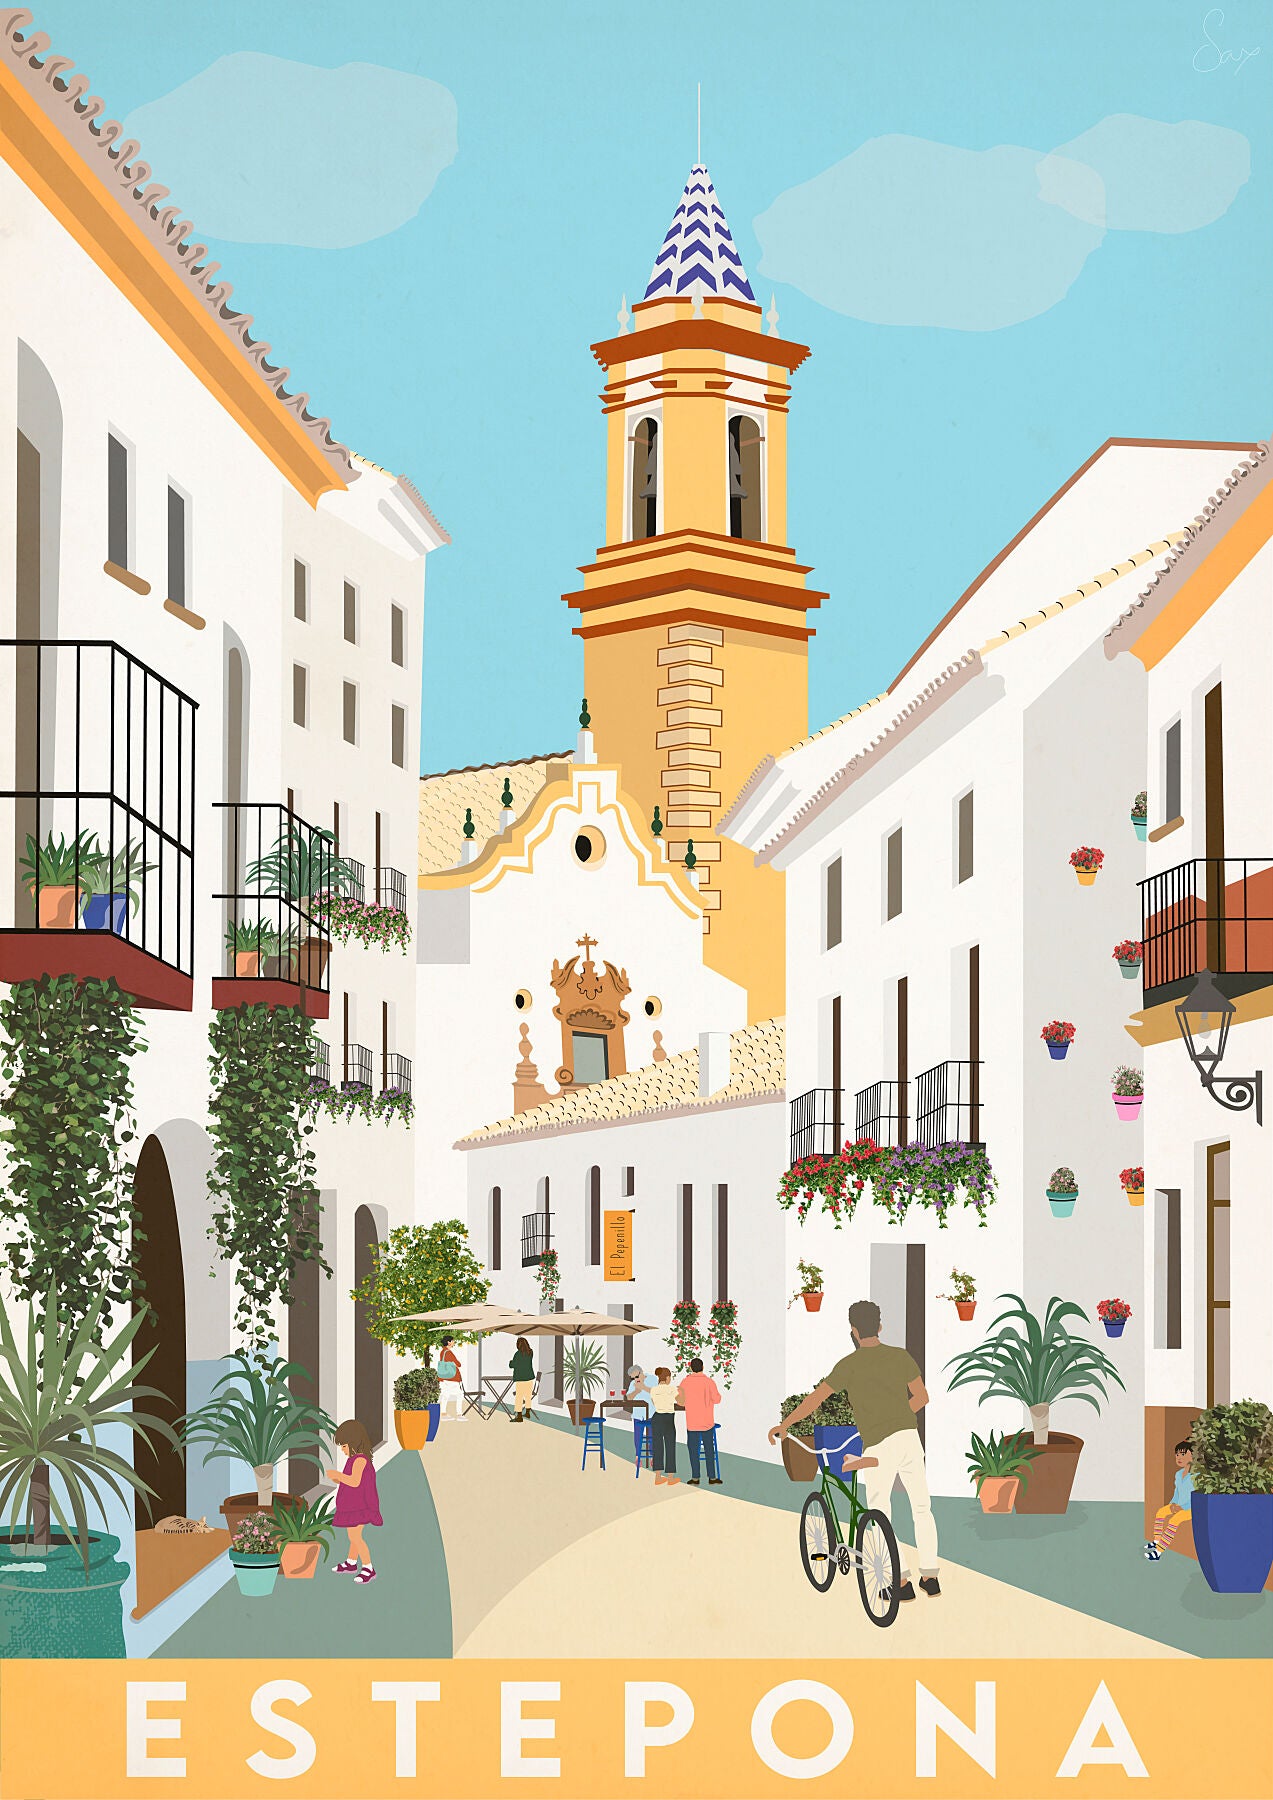 Travel poster of Estepona, Spain